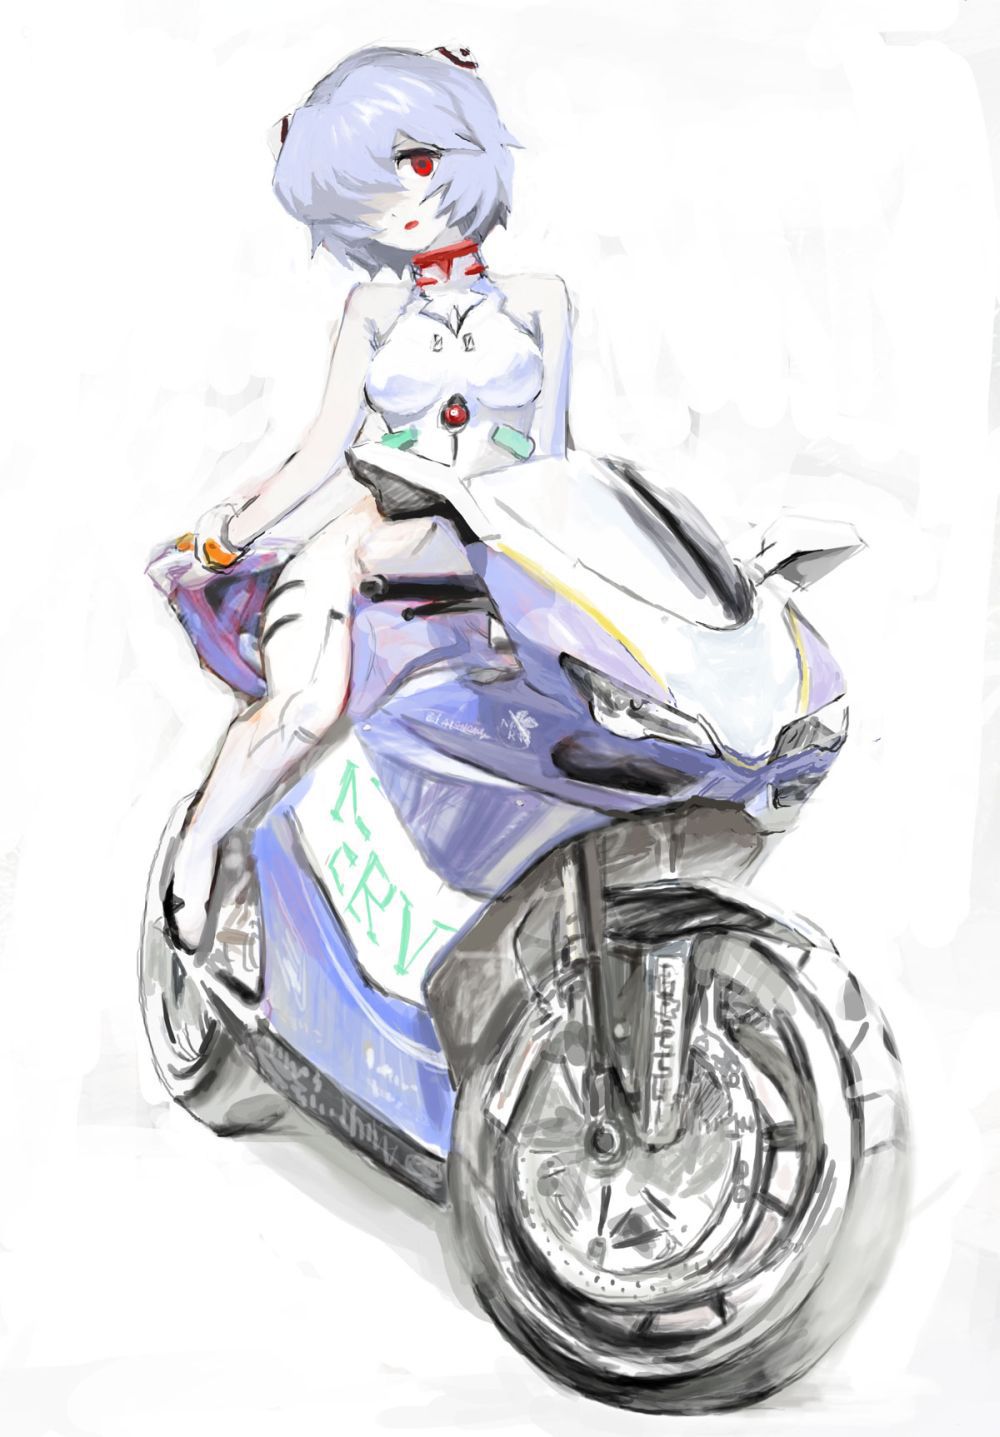 [Secondary] 可愛kattari, sometimes to cool girls riding bikes pictures 8